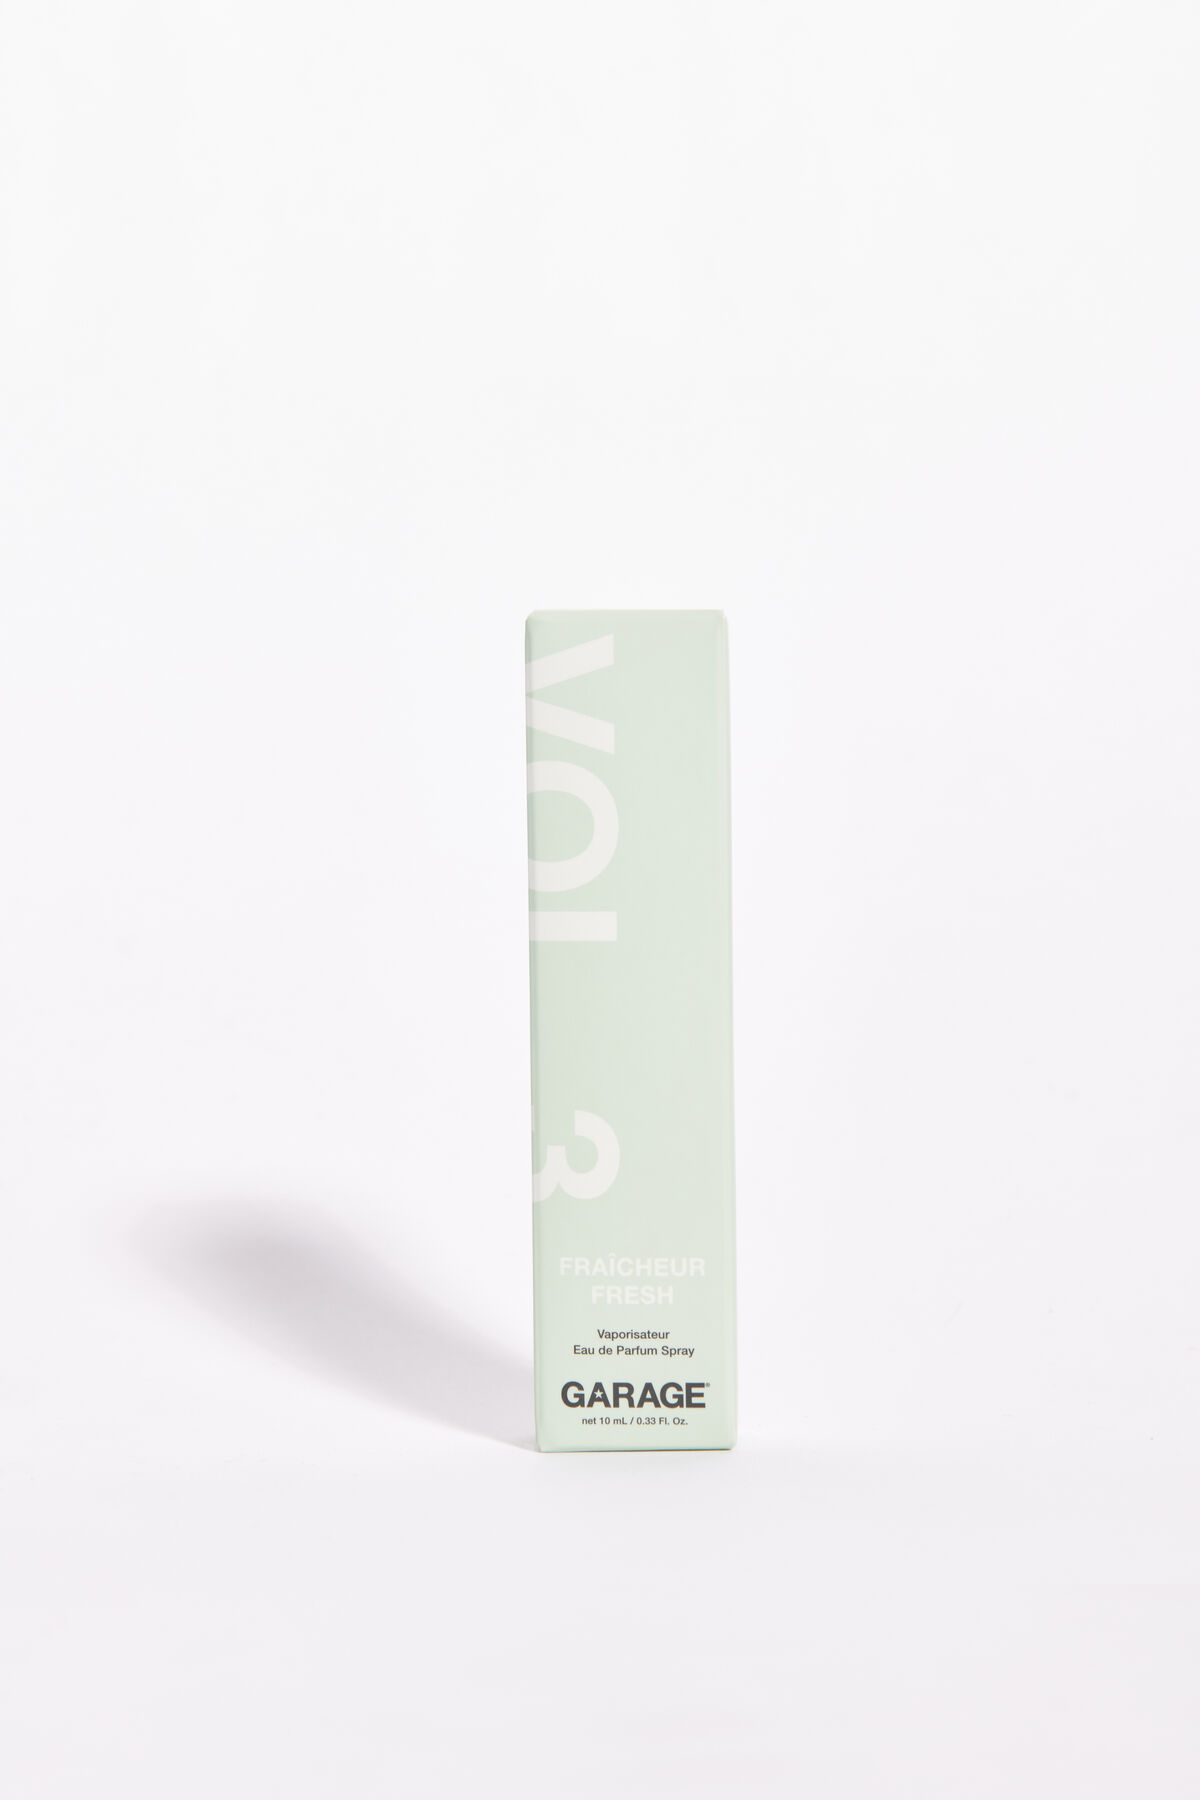 Garage Vol. 3: Fresh - Fragrance by Garage. 4